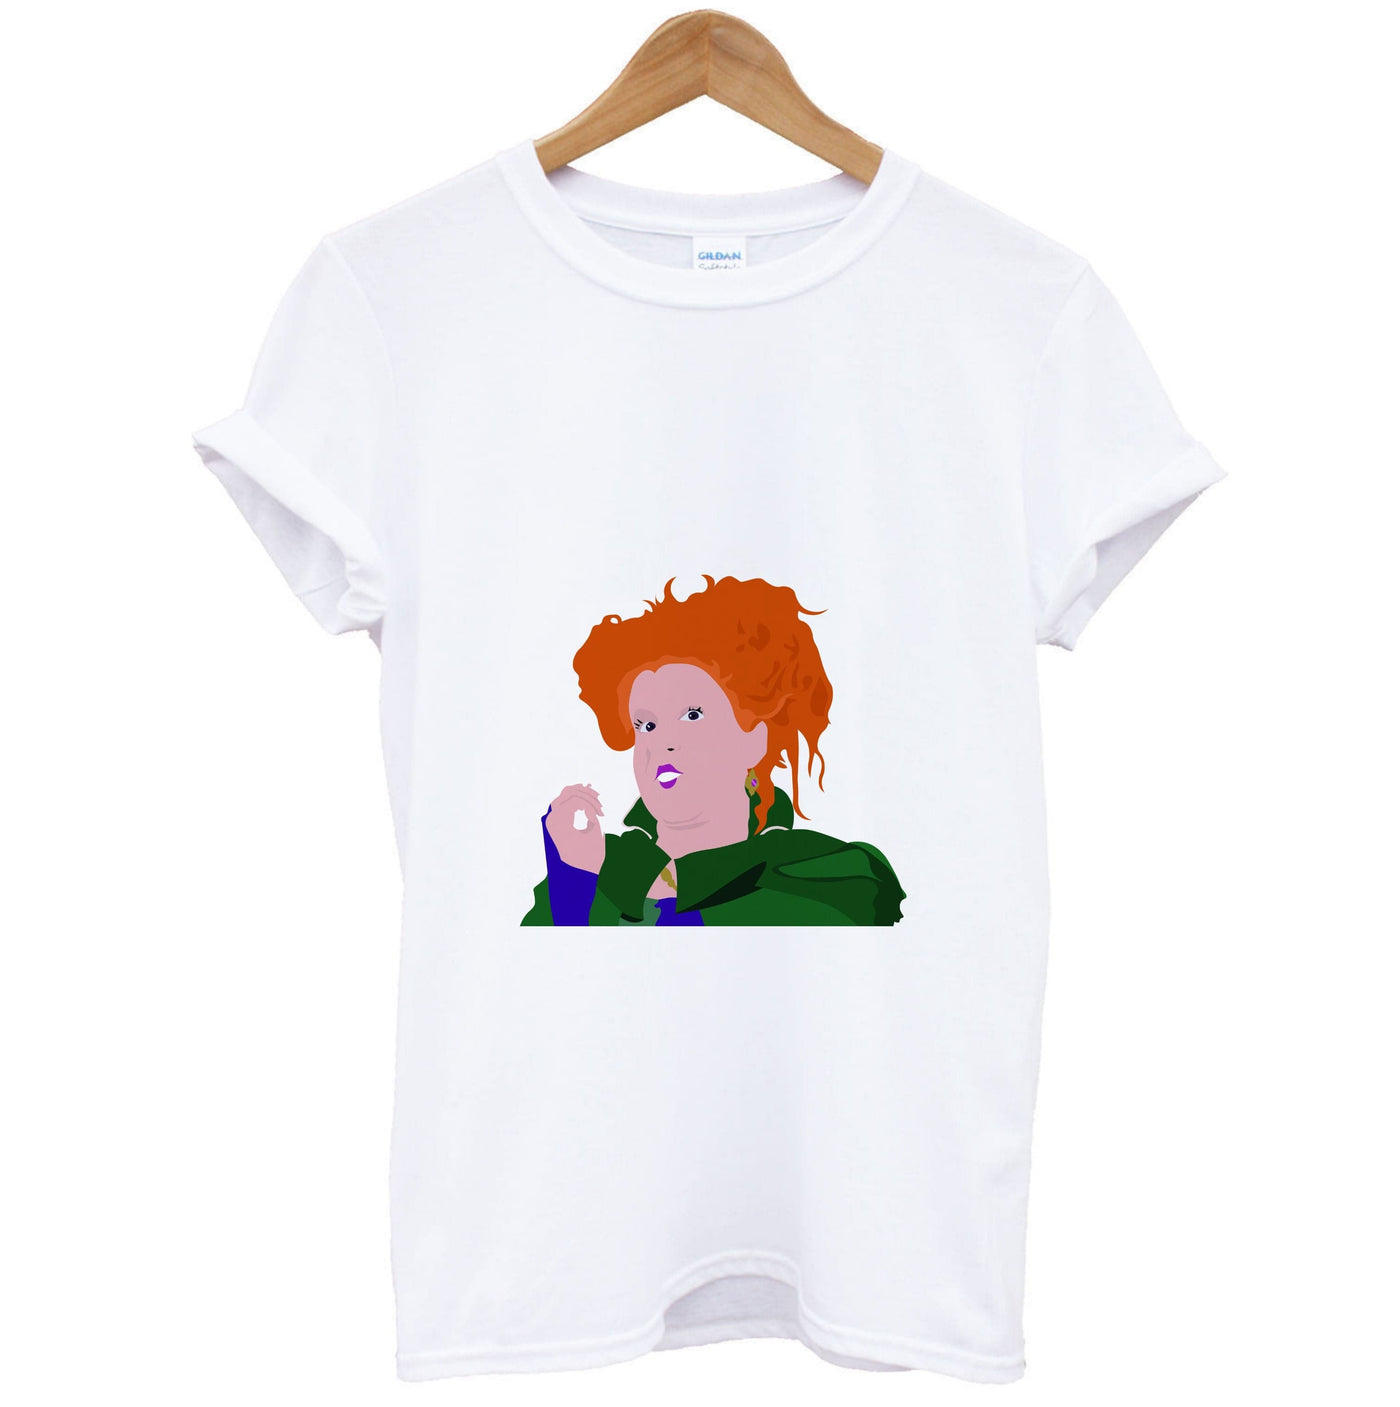 Winifred Sanderson - Hocus Pocus T-Shirt